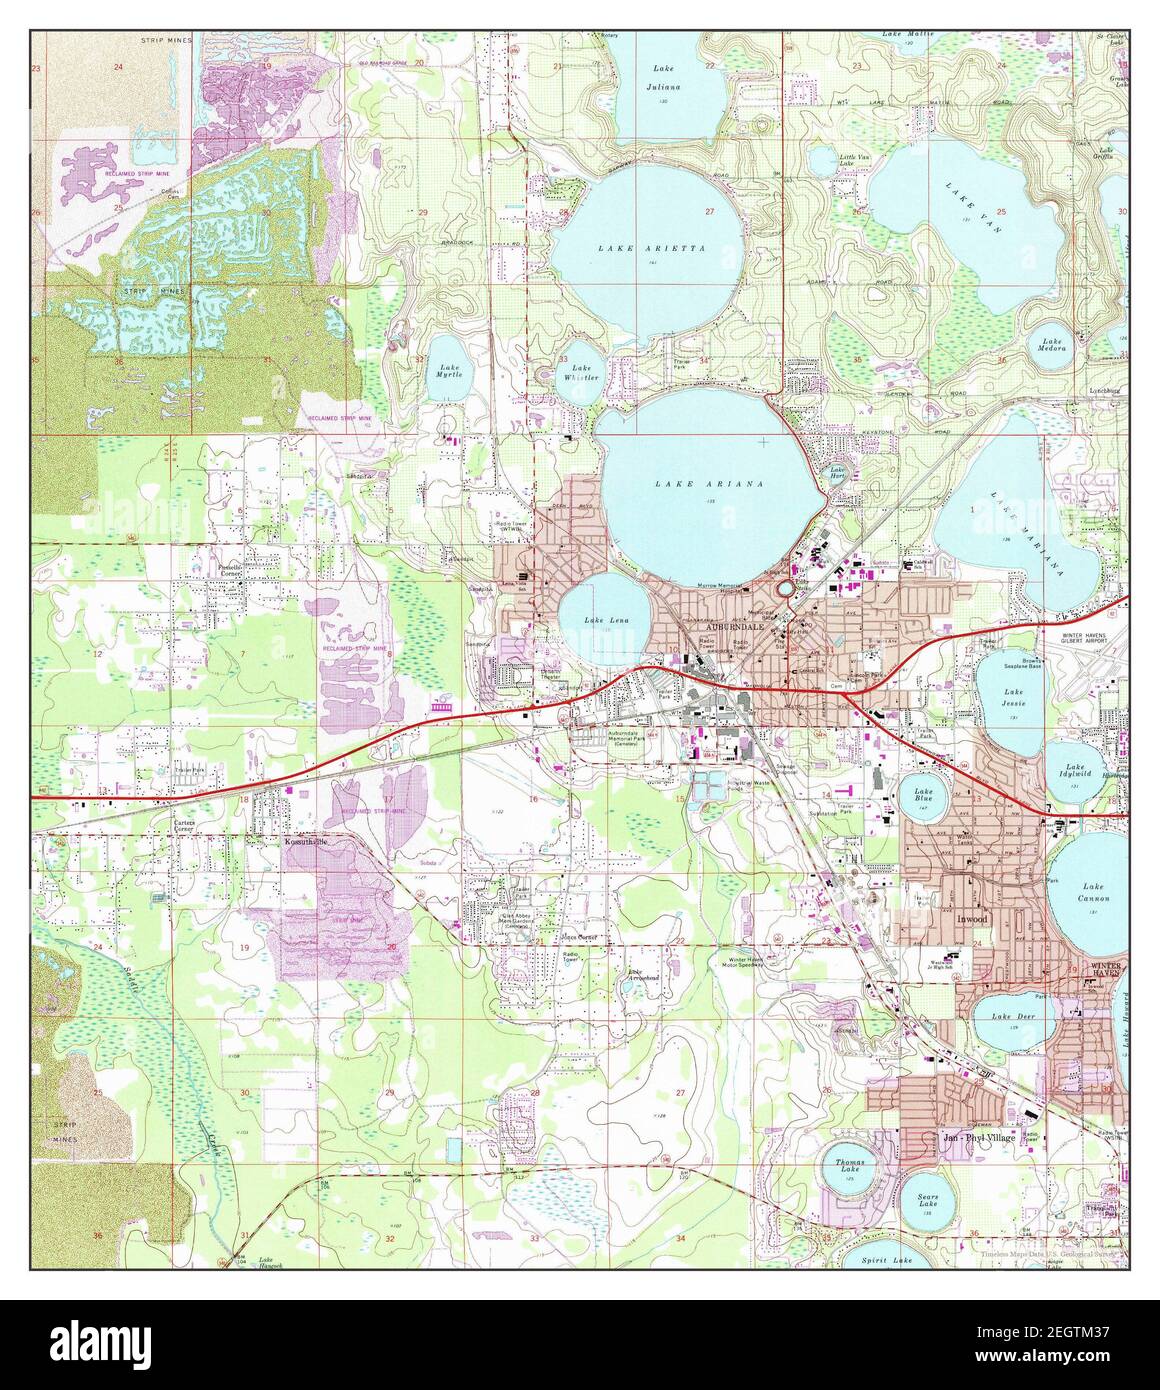 Auburndale, Florida, map 1975, 1:24000, United States of America by Timeless Maps, data U.S. Geological Survey Stock Photo